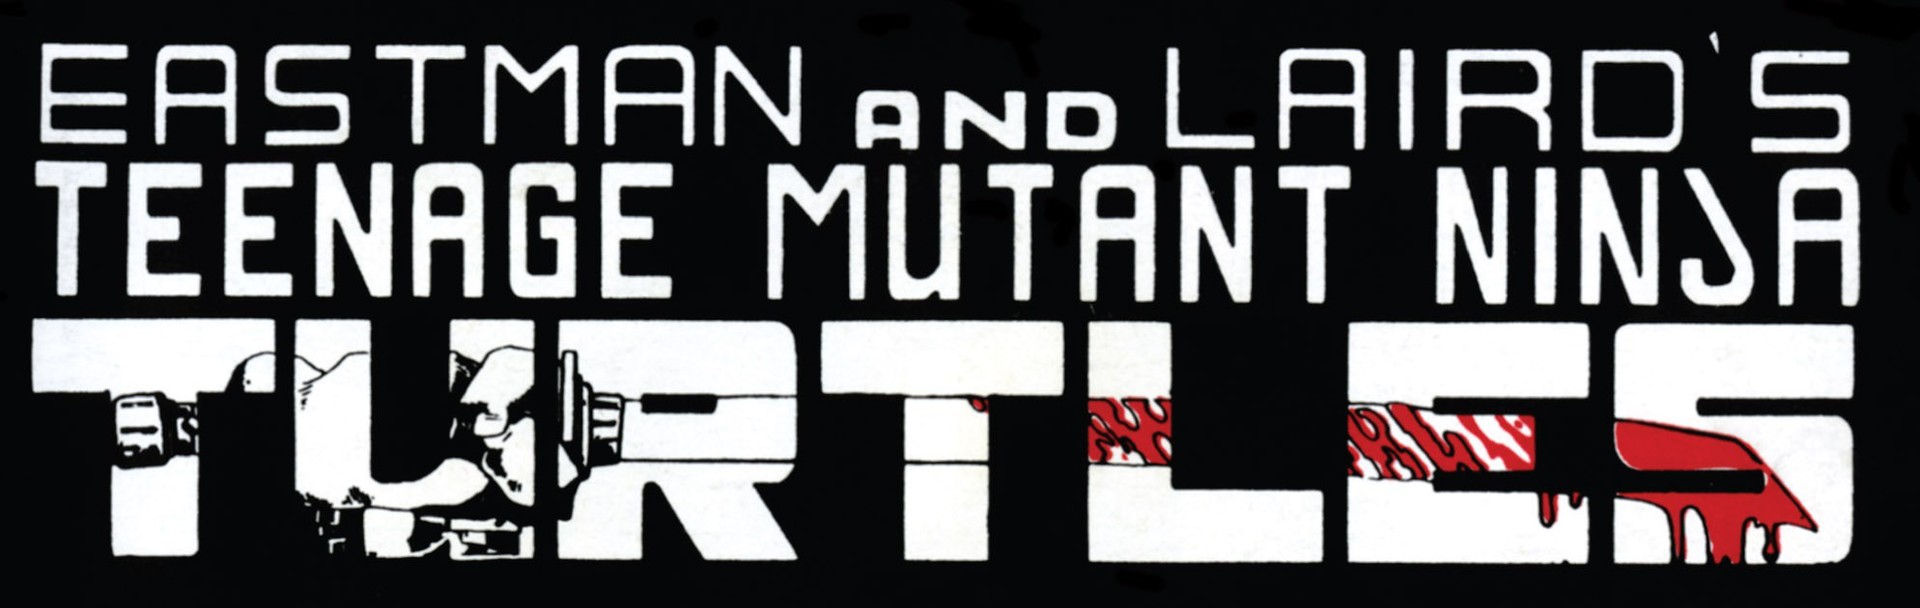 Teenage Mutant Ninja Turtles Coloring Page - Root Inspirations